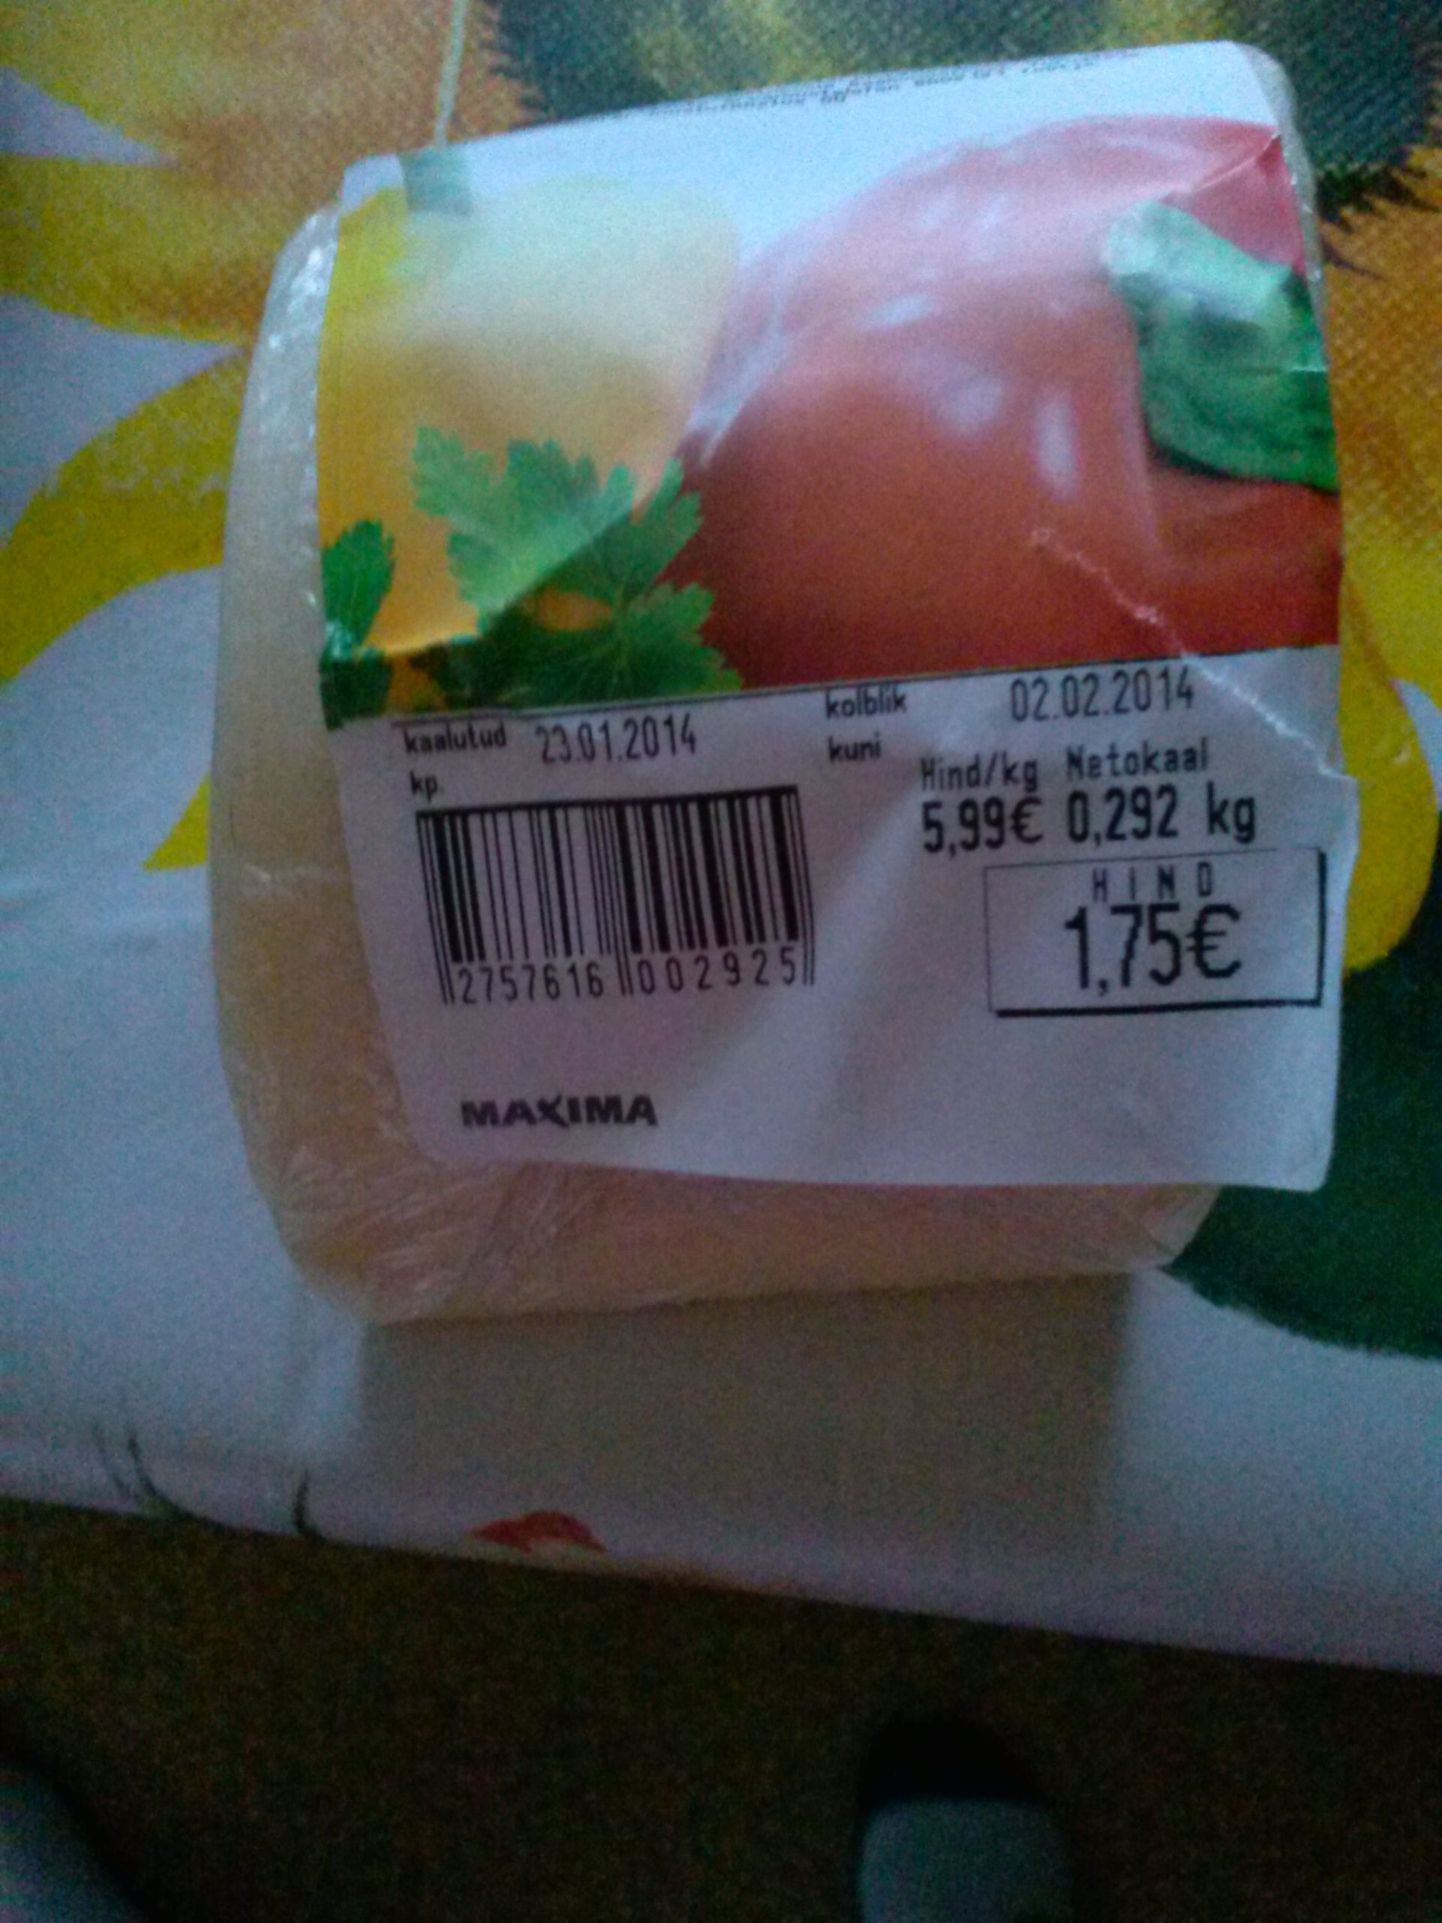 Räpina Maximast ostetud juust.